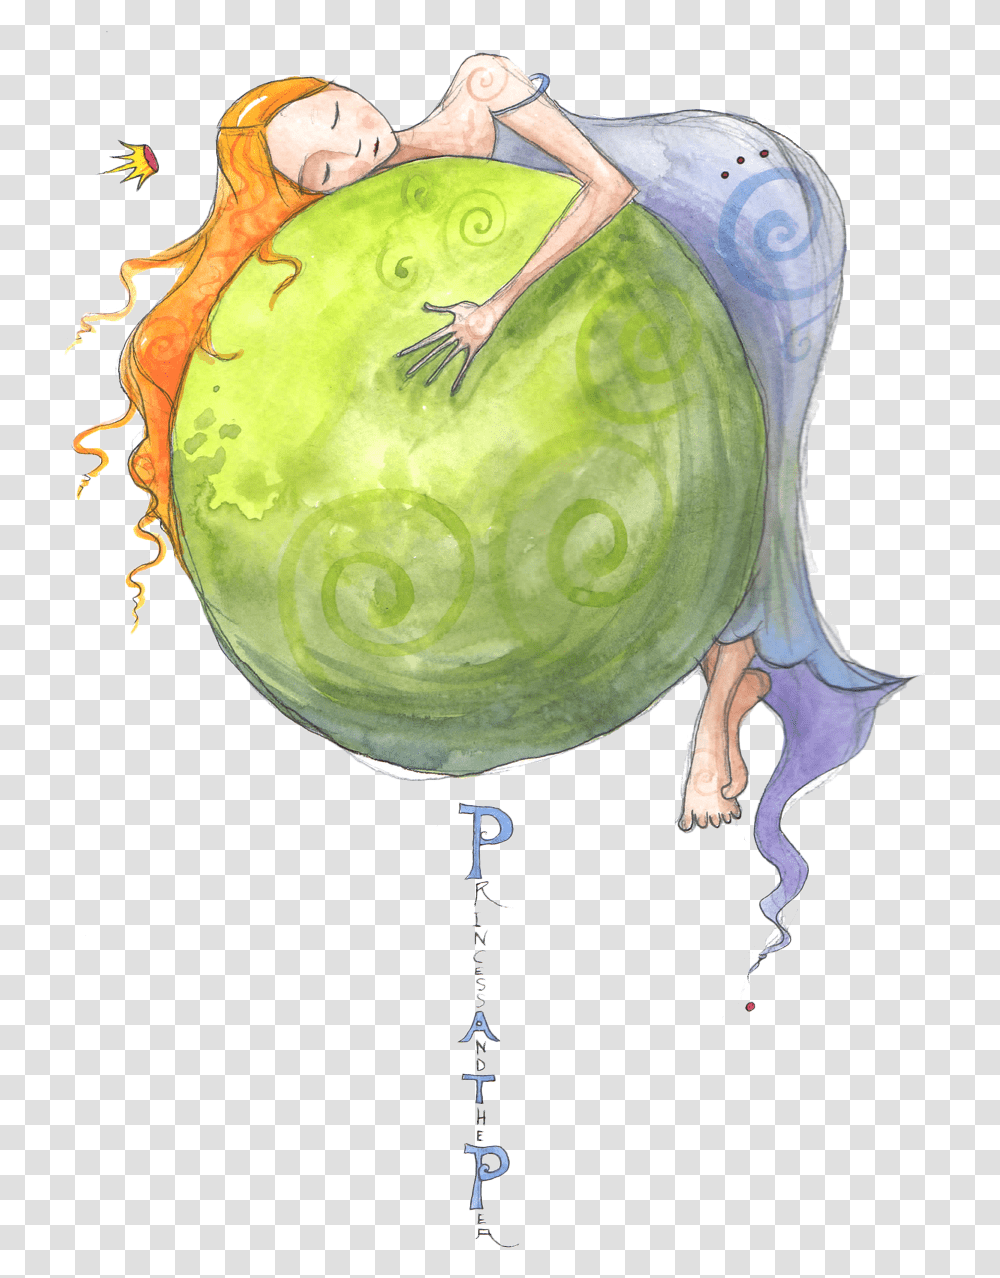 Fruit Water Splash Clipart Princess Princess And The Peas, Plant, Produce, Food, Sphere Transparent Png